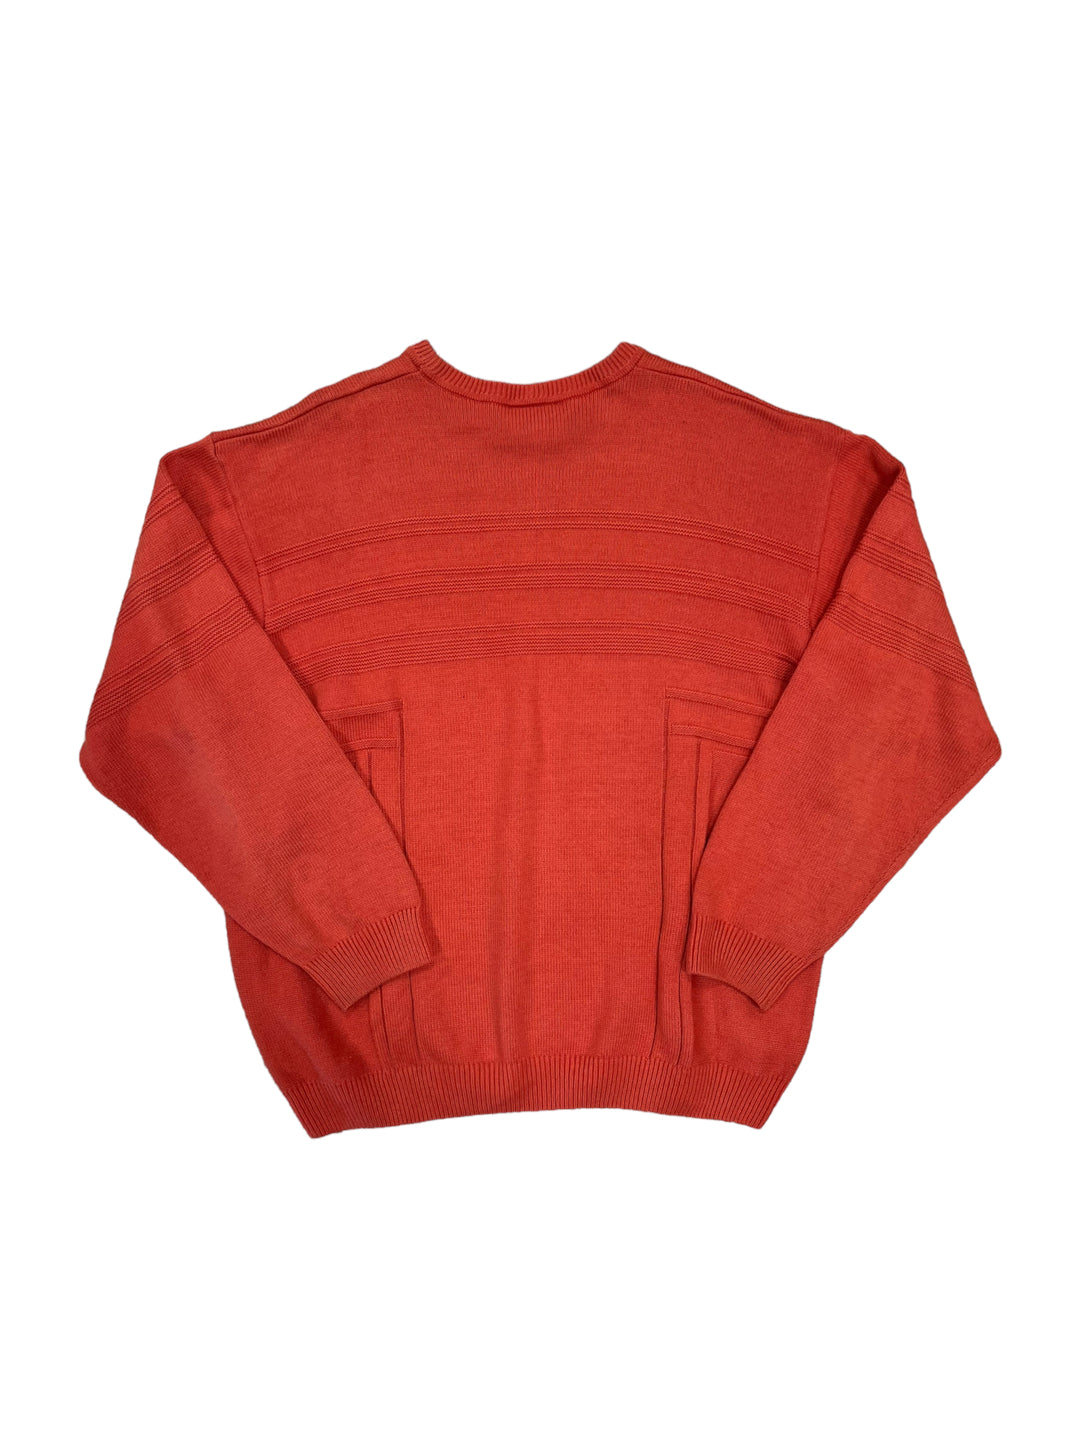 Vintage Lacoste Sweater Men’s Large